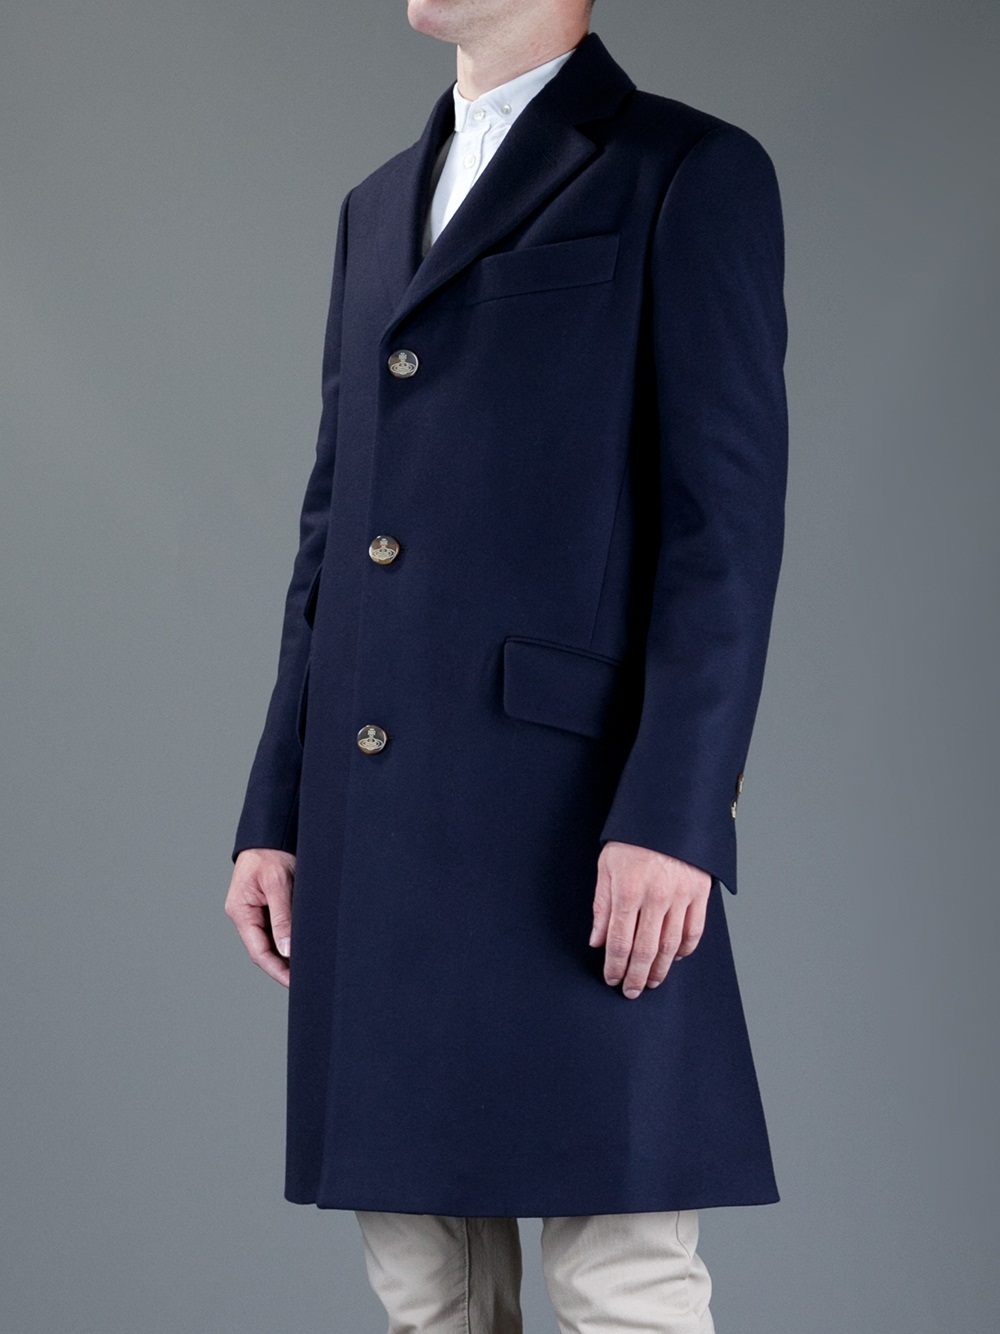 Lyst - Vivienne Westwood Military Coat in Blue for Men